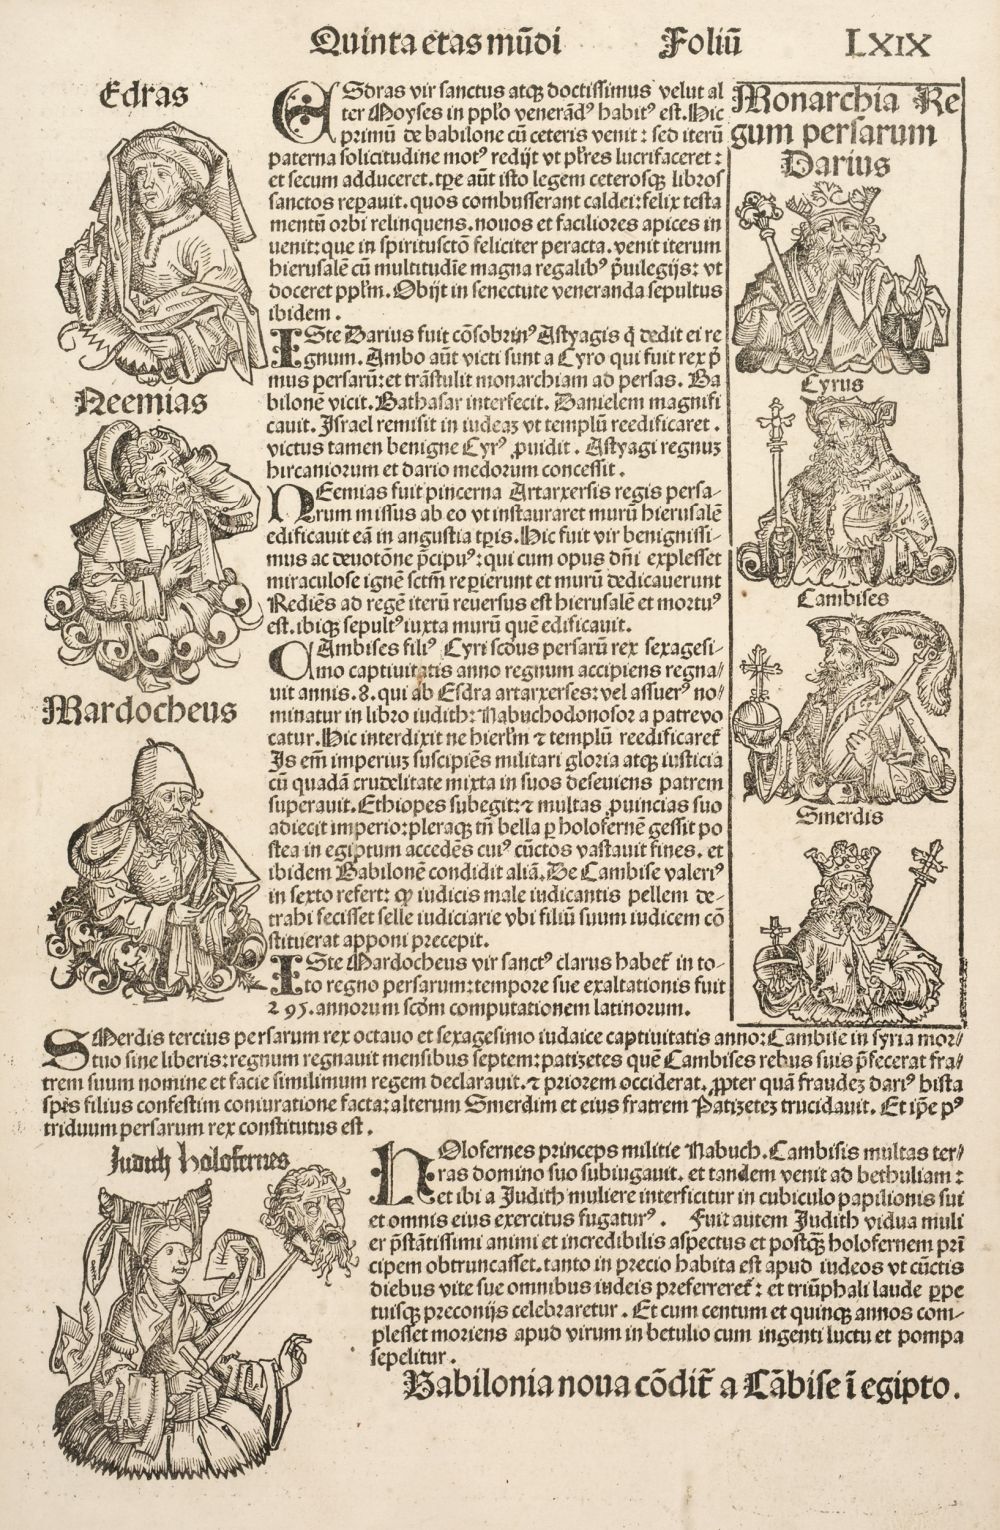 * Nuremberg Chronicle. Single leaf (folio 69) from the Liber Chronicarum, 1493